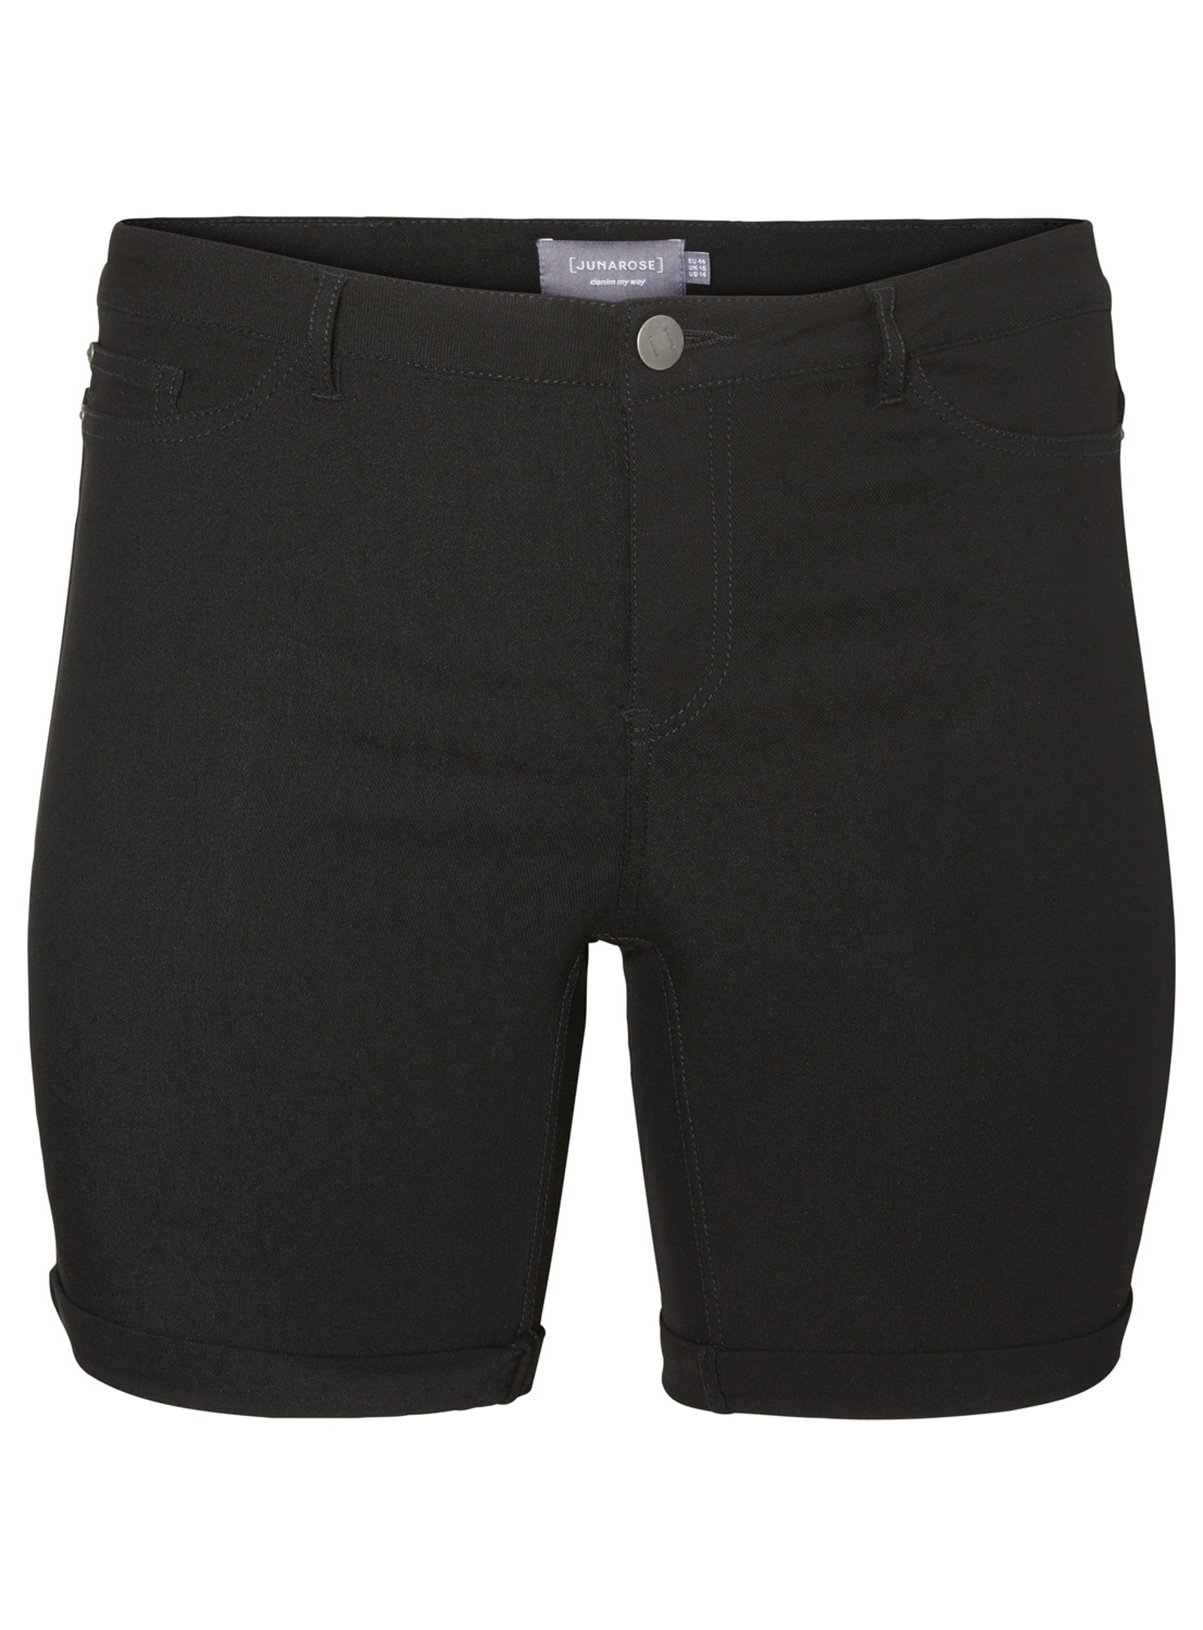 JUNAROSE Black Slim Fit Shorts Review